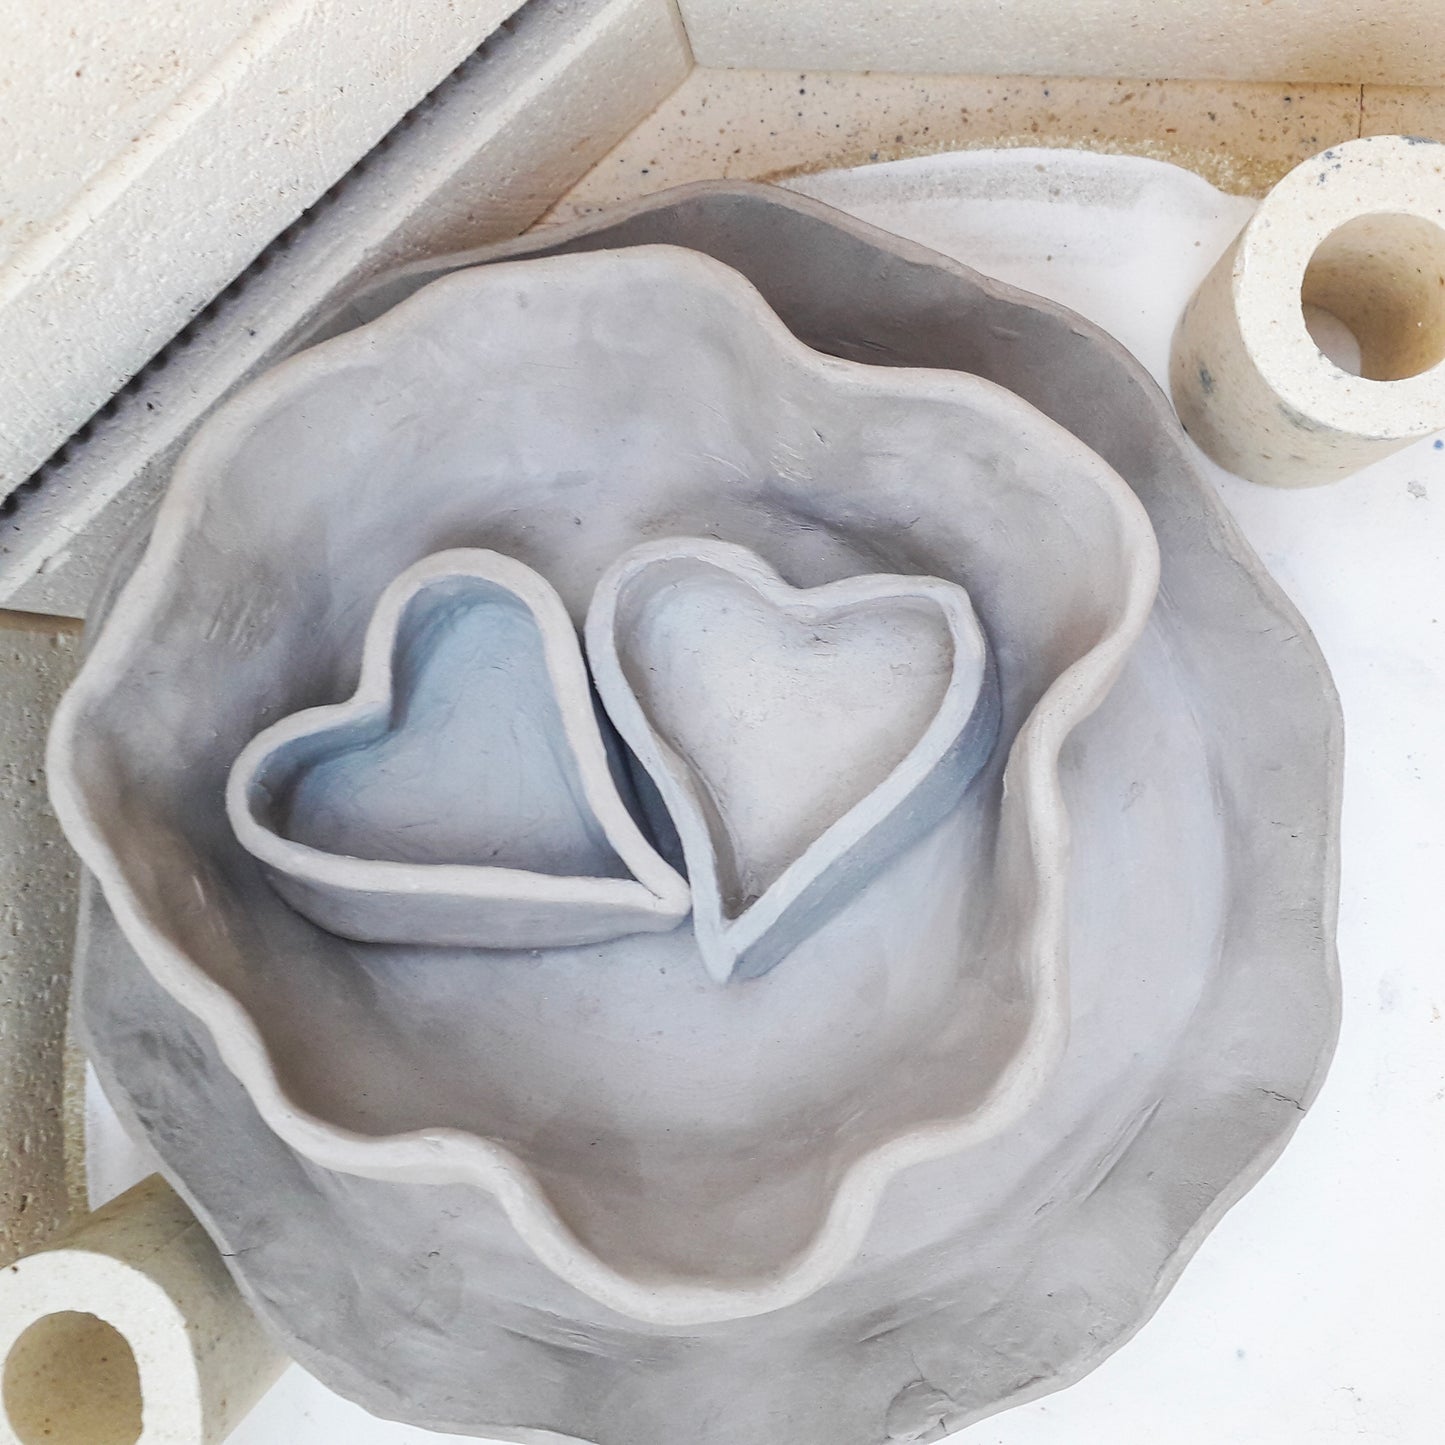 Karen Townsend Ceramics Workshop -  Friday 31st May 11:00-4:30pm